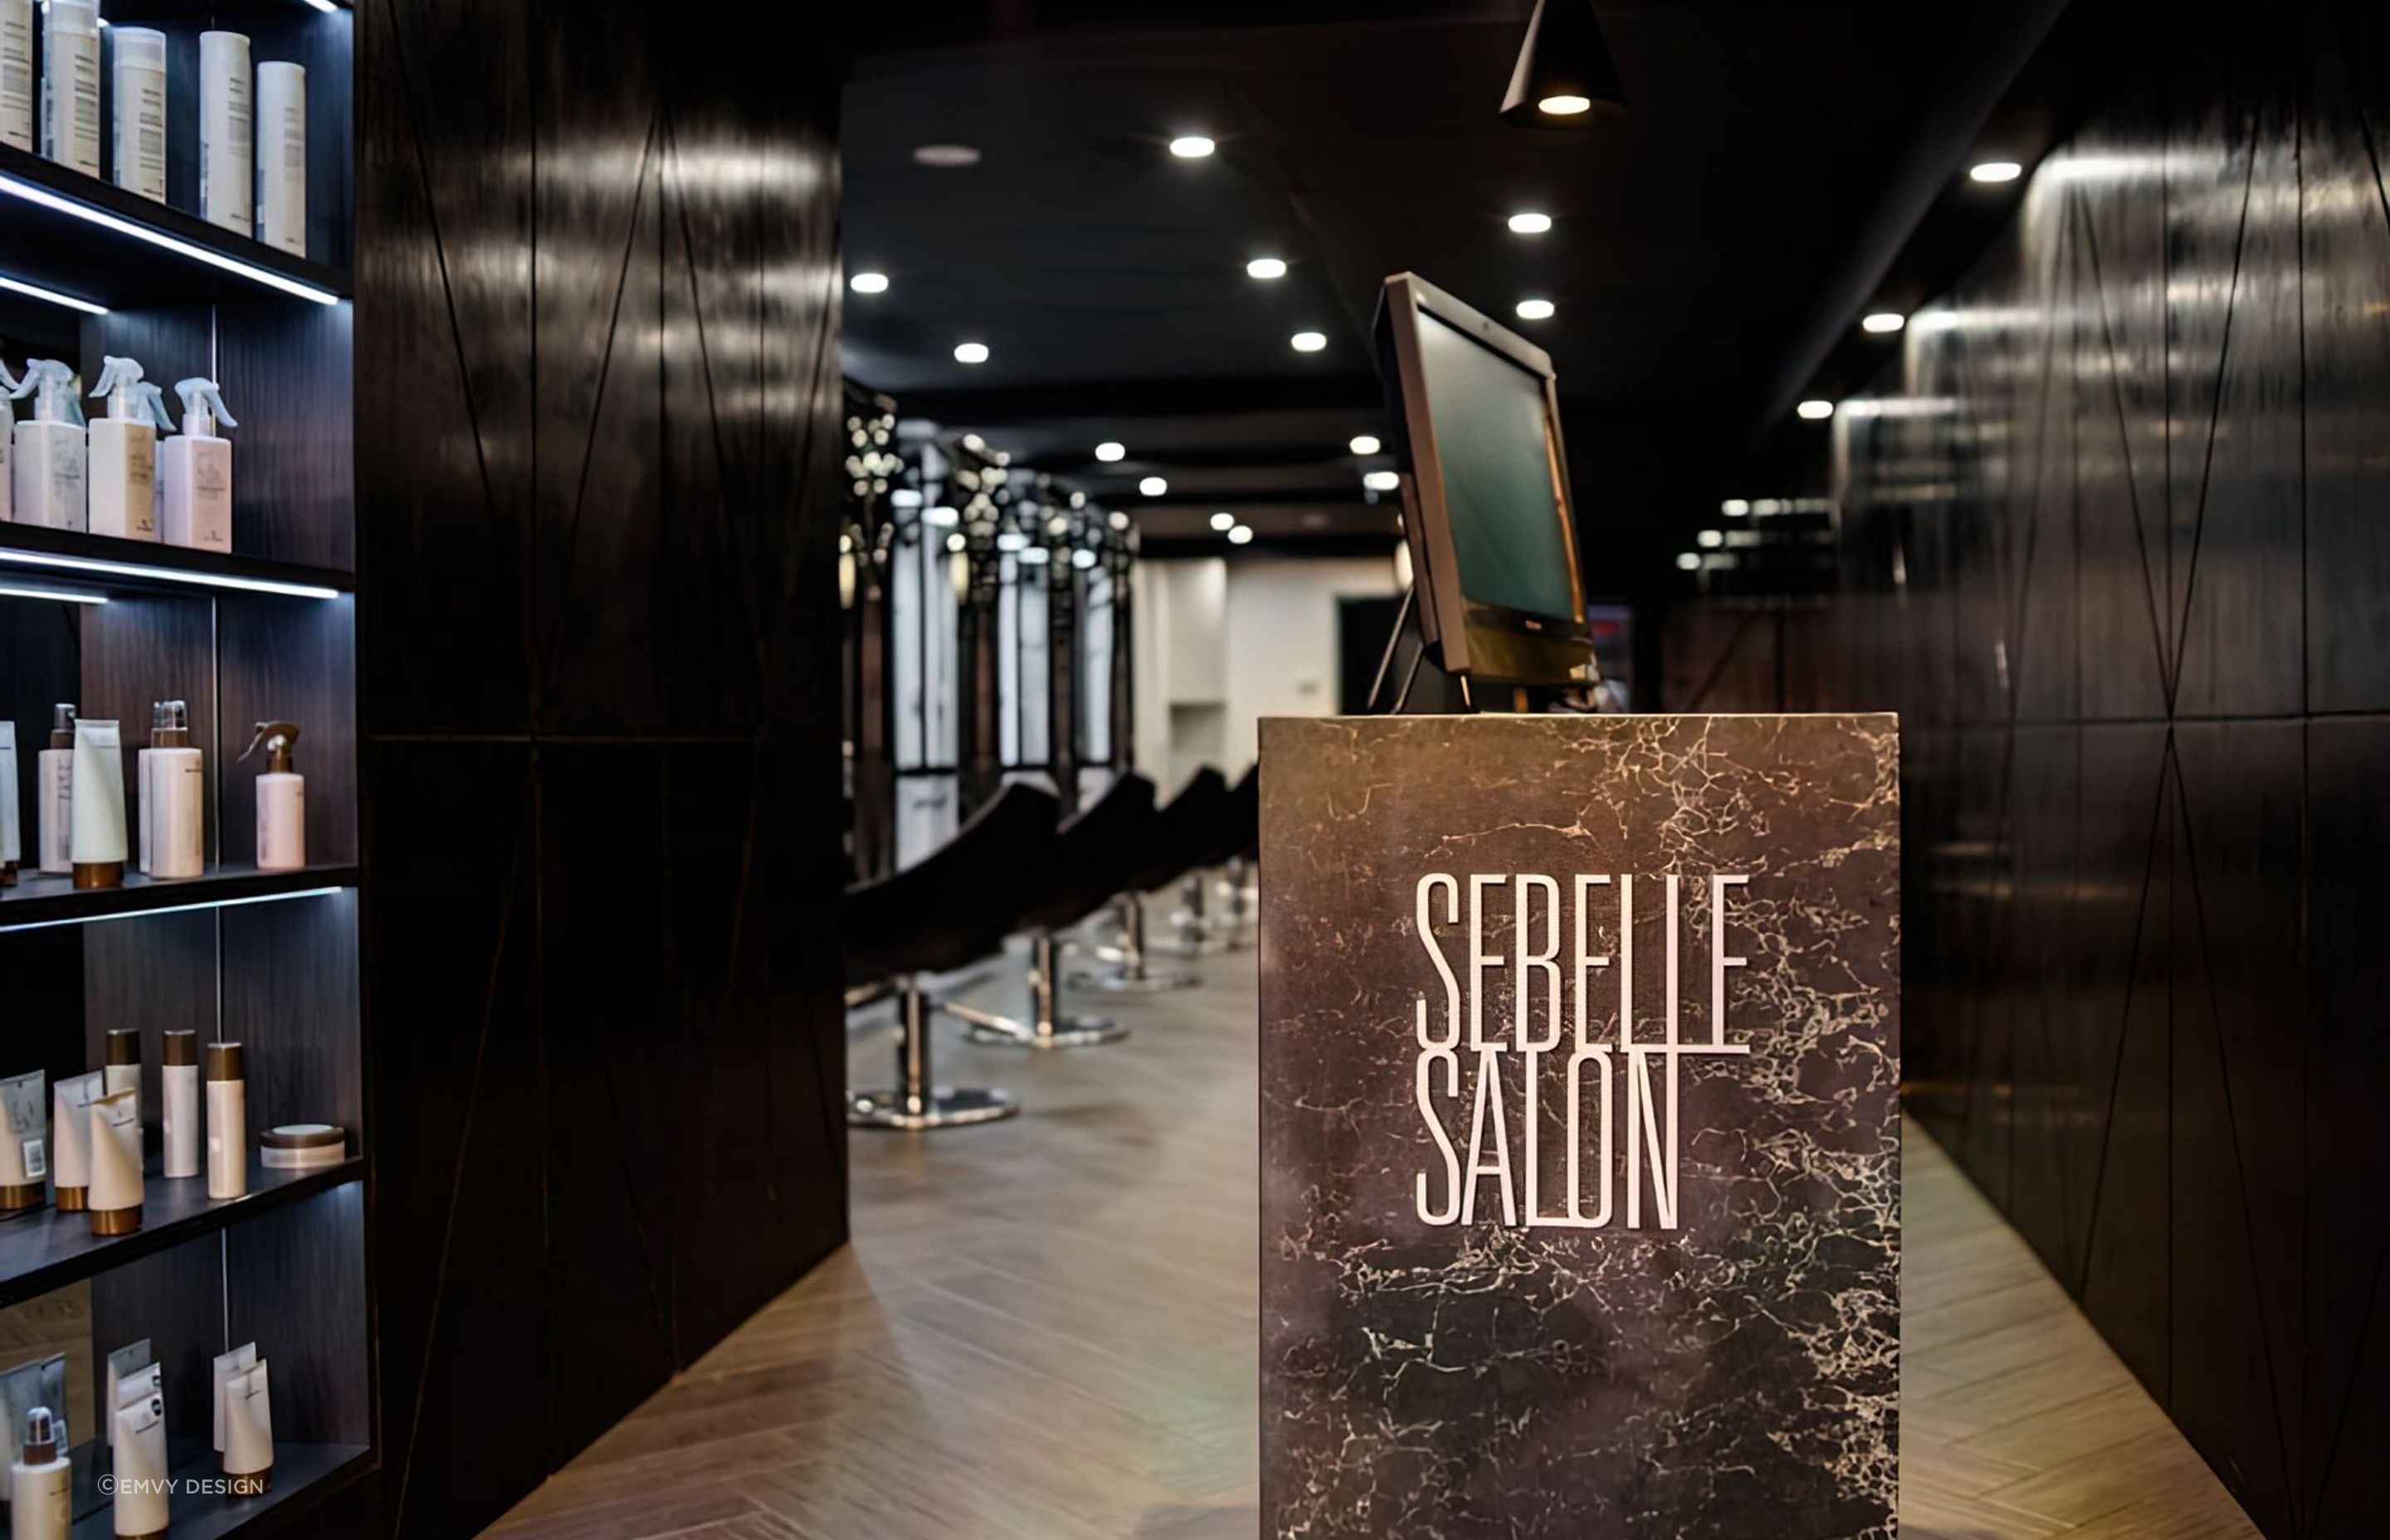 Sebelle Salon